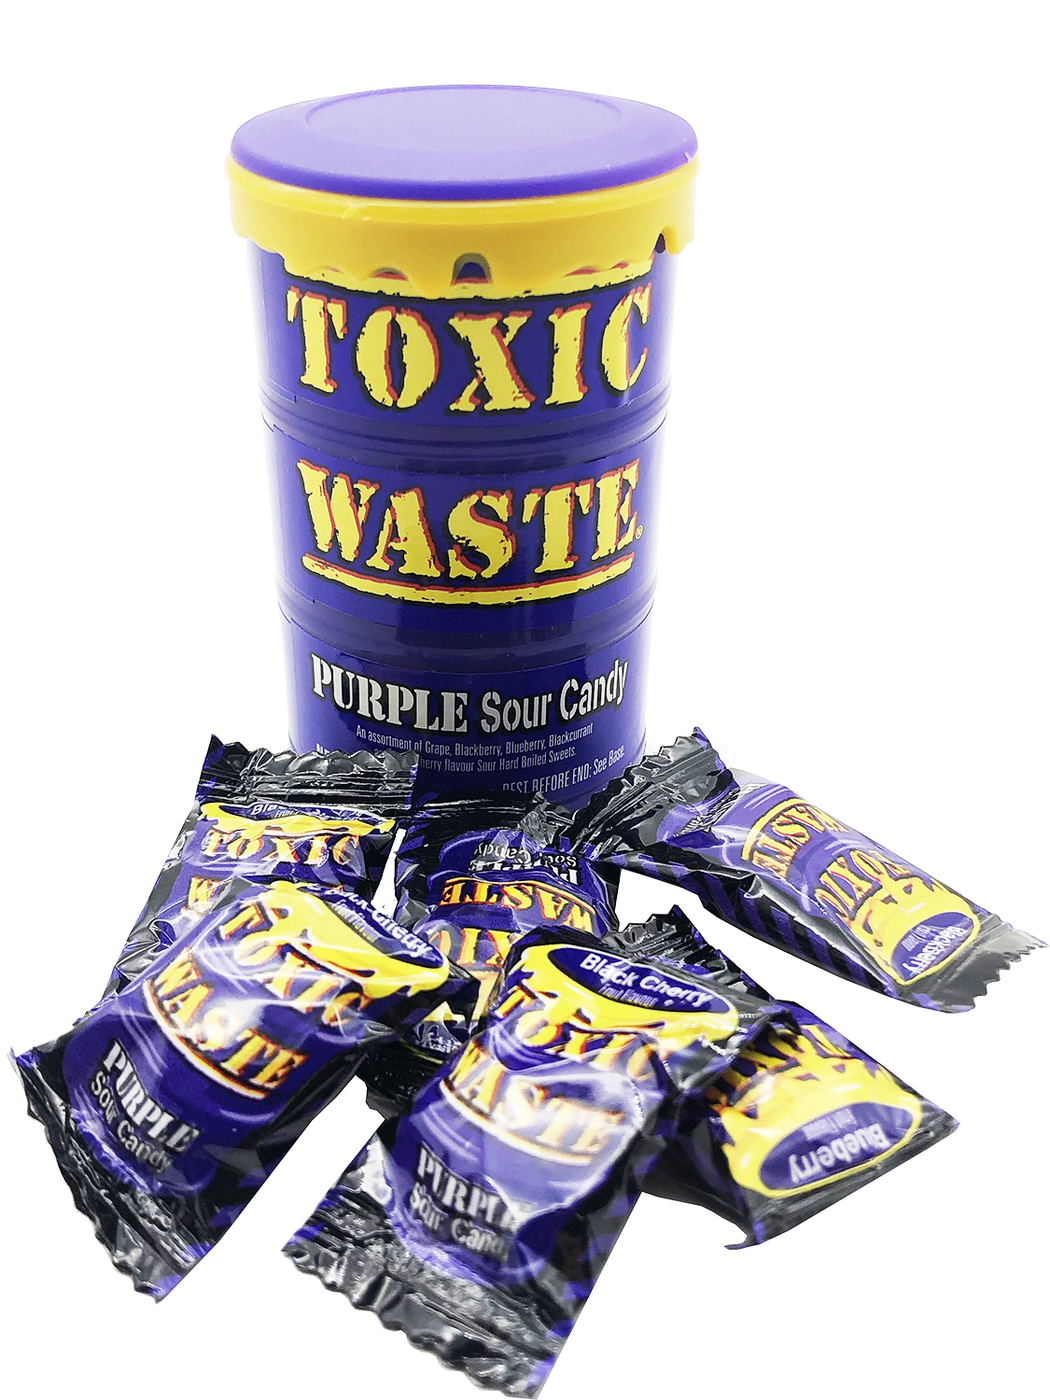 Конфеты Toxic waste Purple Sour Candy (фиолетовая) 42г 1/12